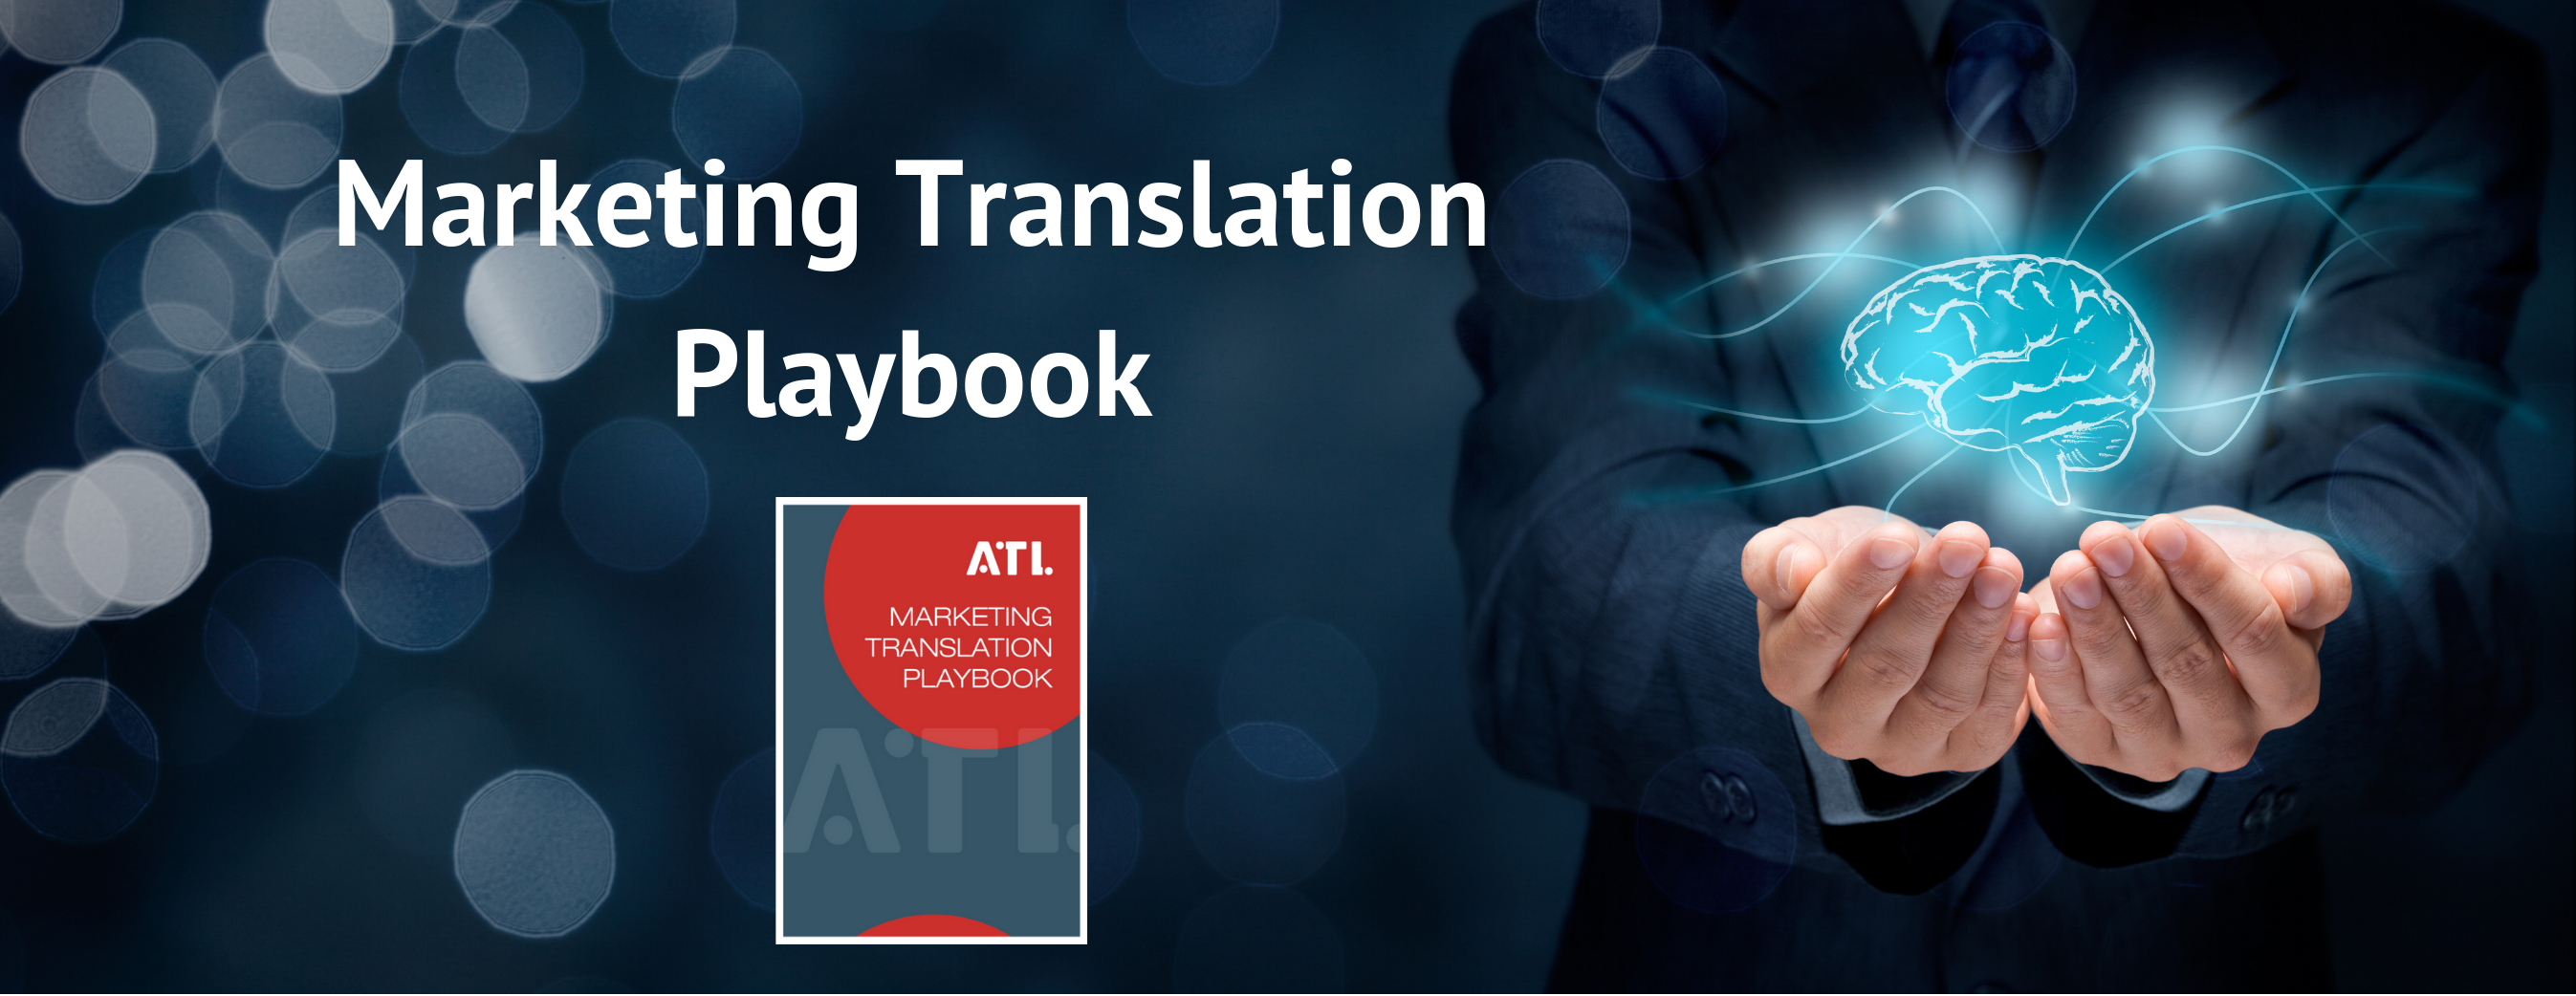 Marketing Translation E-book